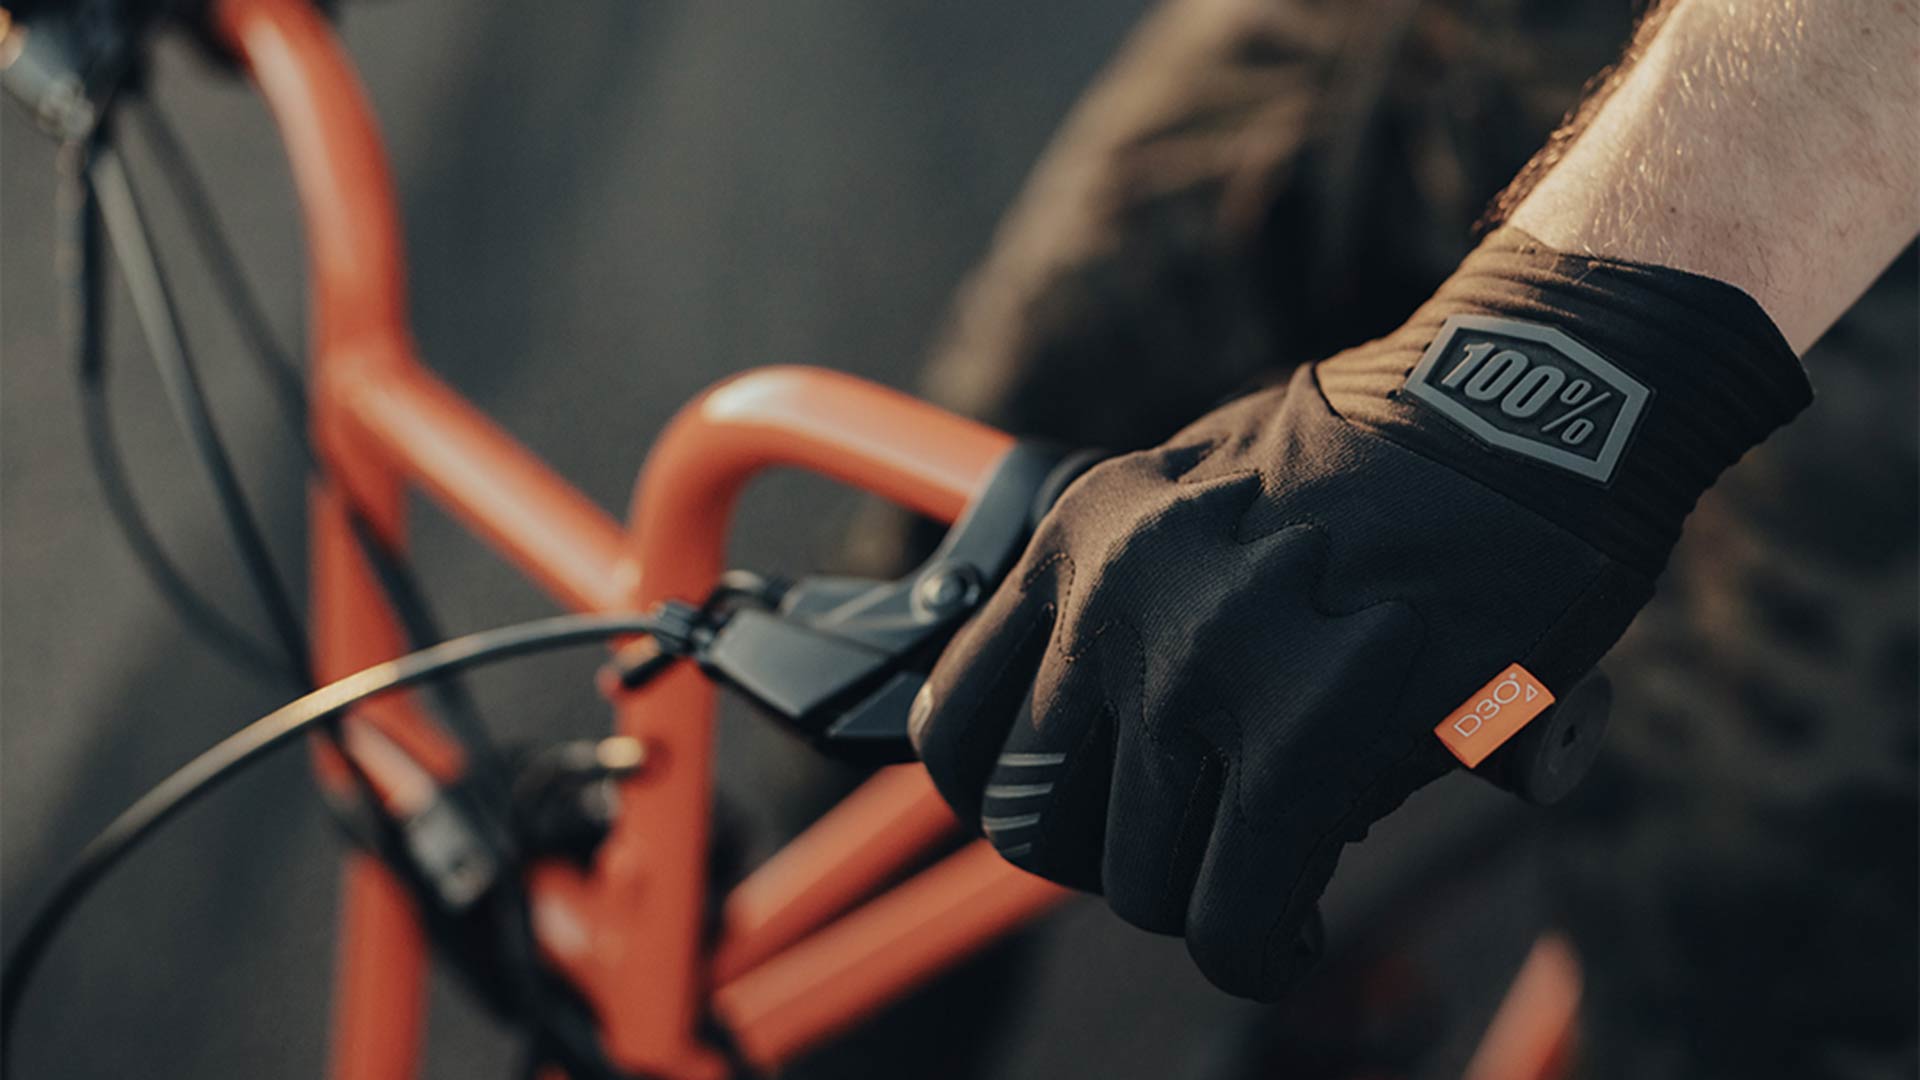 A rider wearing 100% brand gloves while riding their SUPER73 e-bike